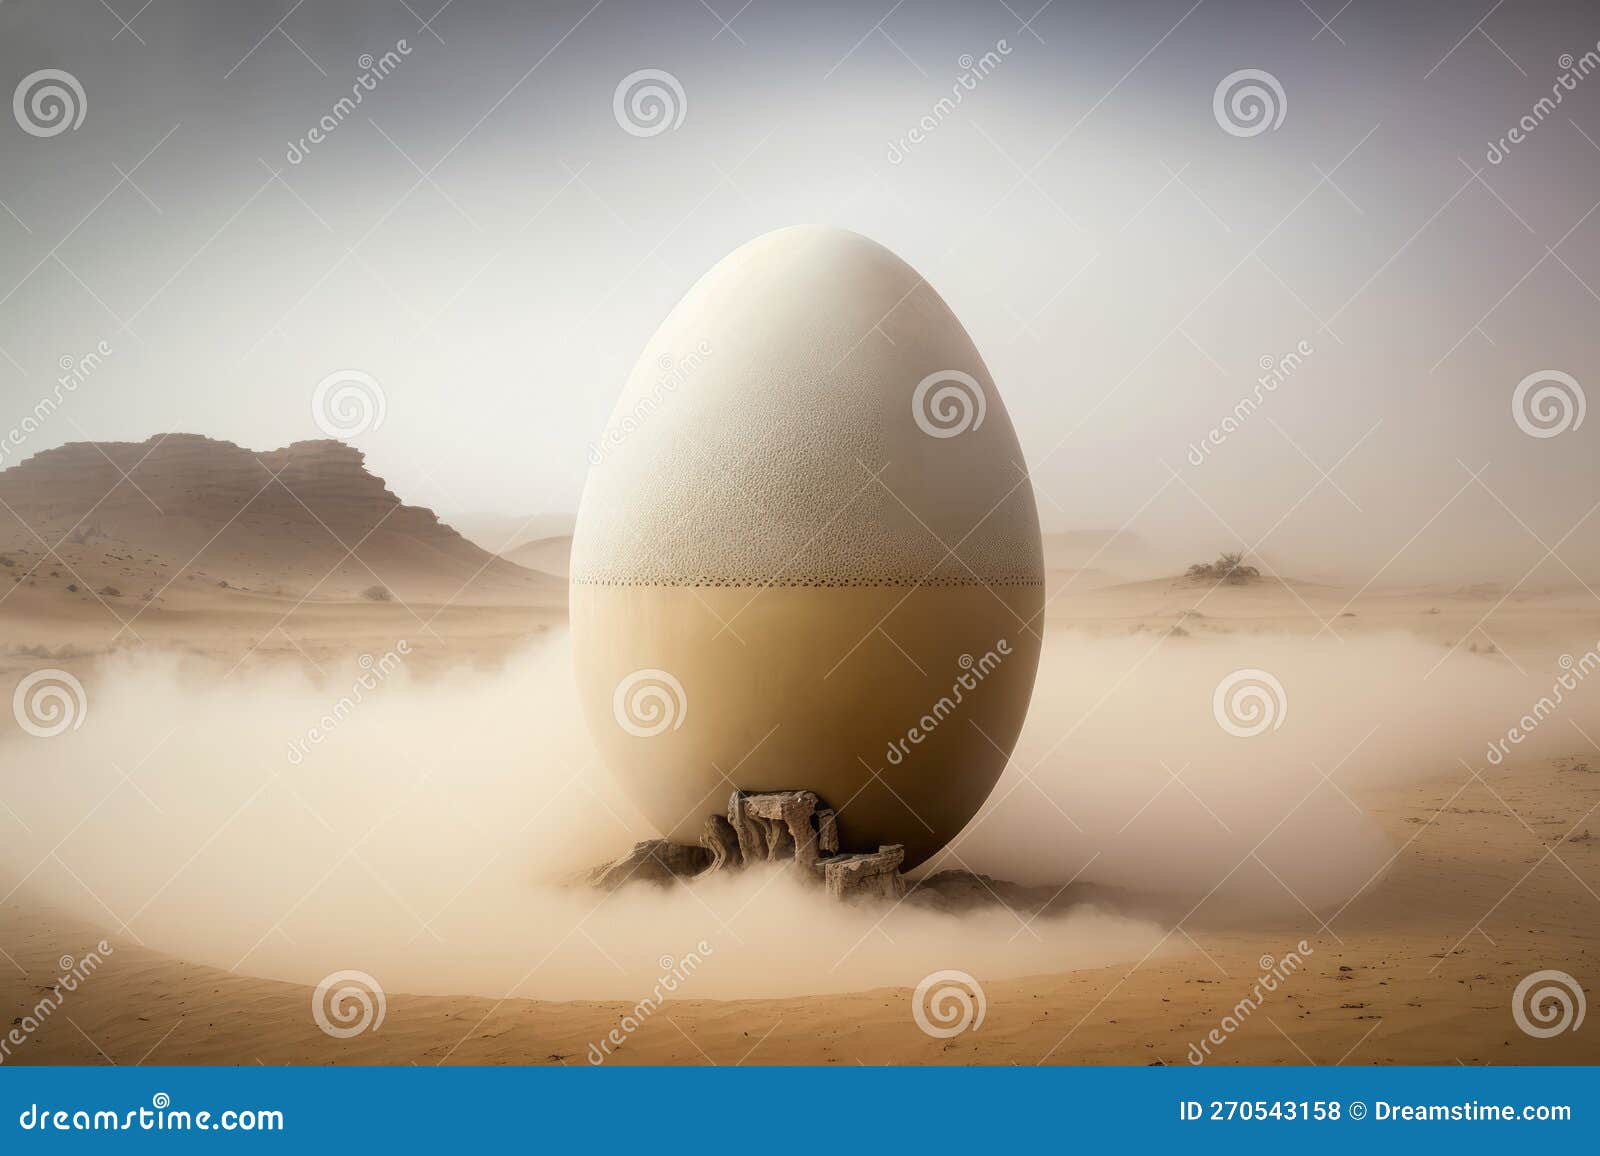 One Big African Easter Egg stock illustration. Illustration of reflection - 270543158